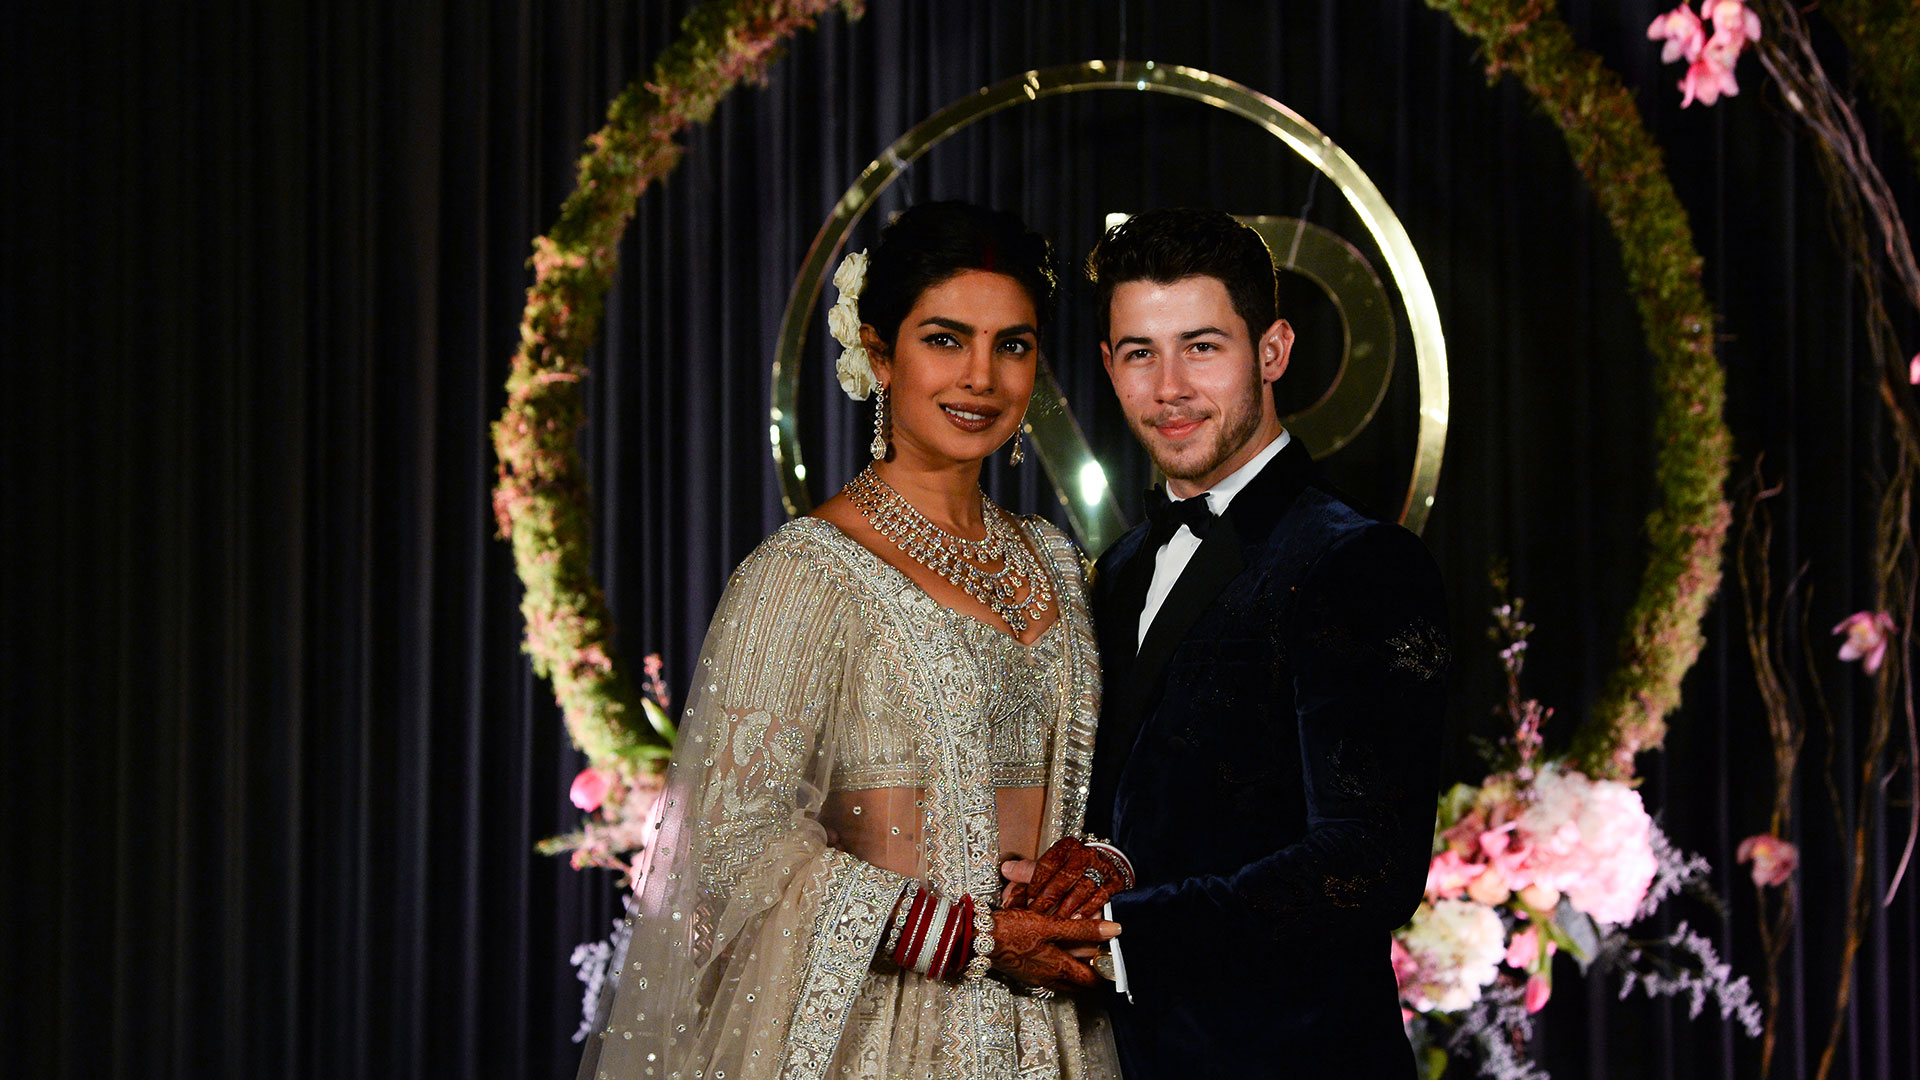 ritual de boda hindú de Nick Jonas y Priyanka Chopra (AFP)